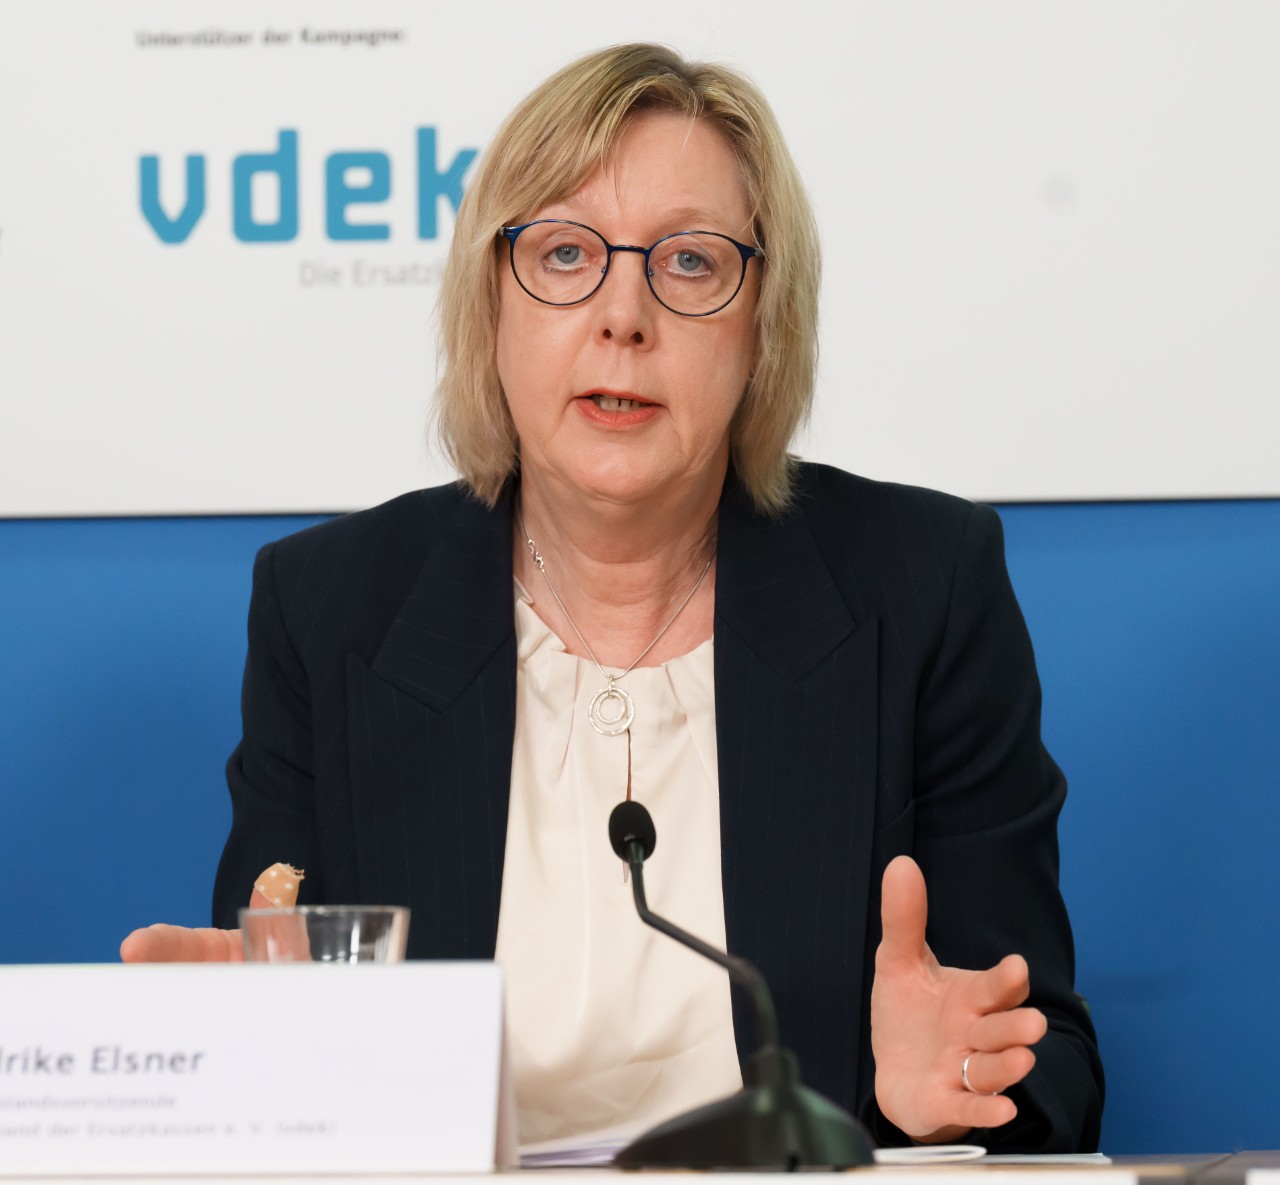 Ulrike Elsner, vdek-Vorstandsvorsitzende 